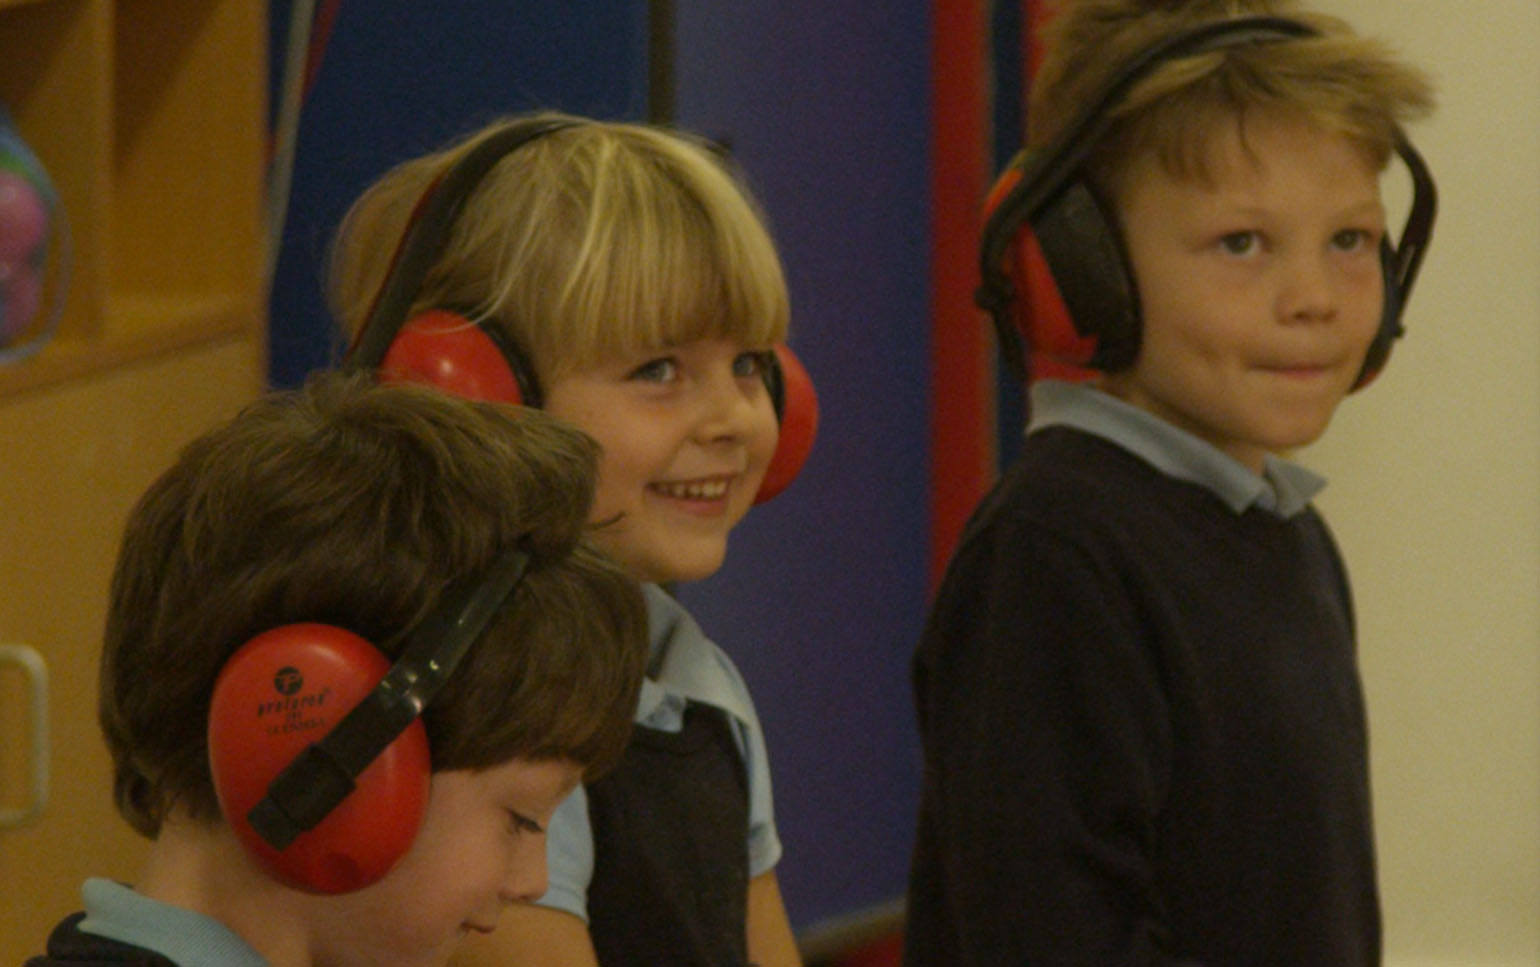 School children with ear muffs on